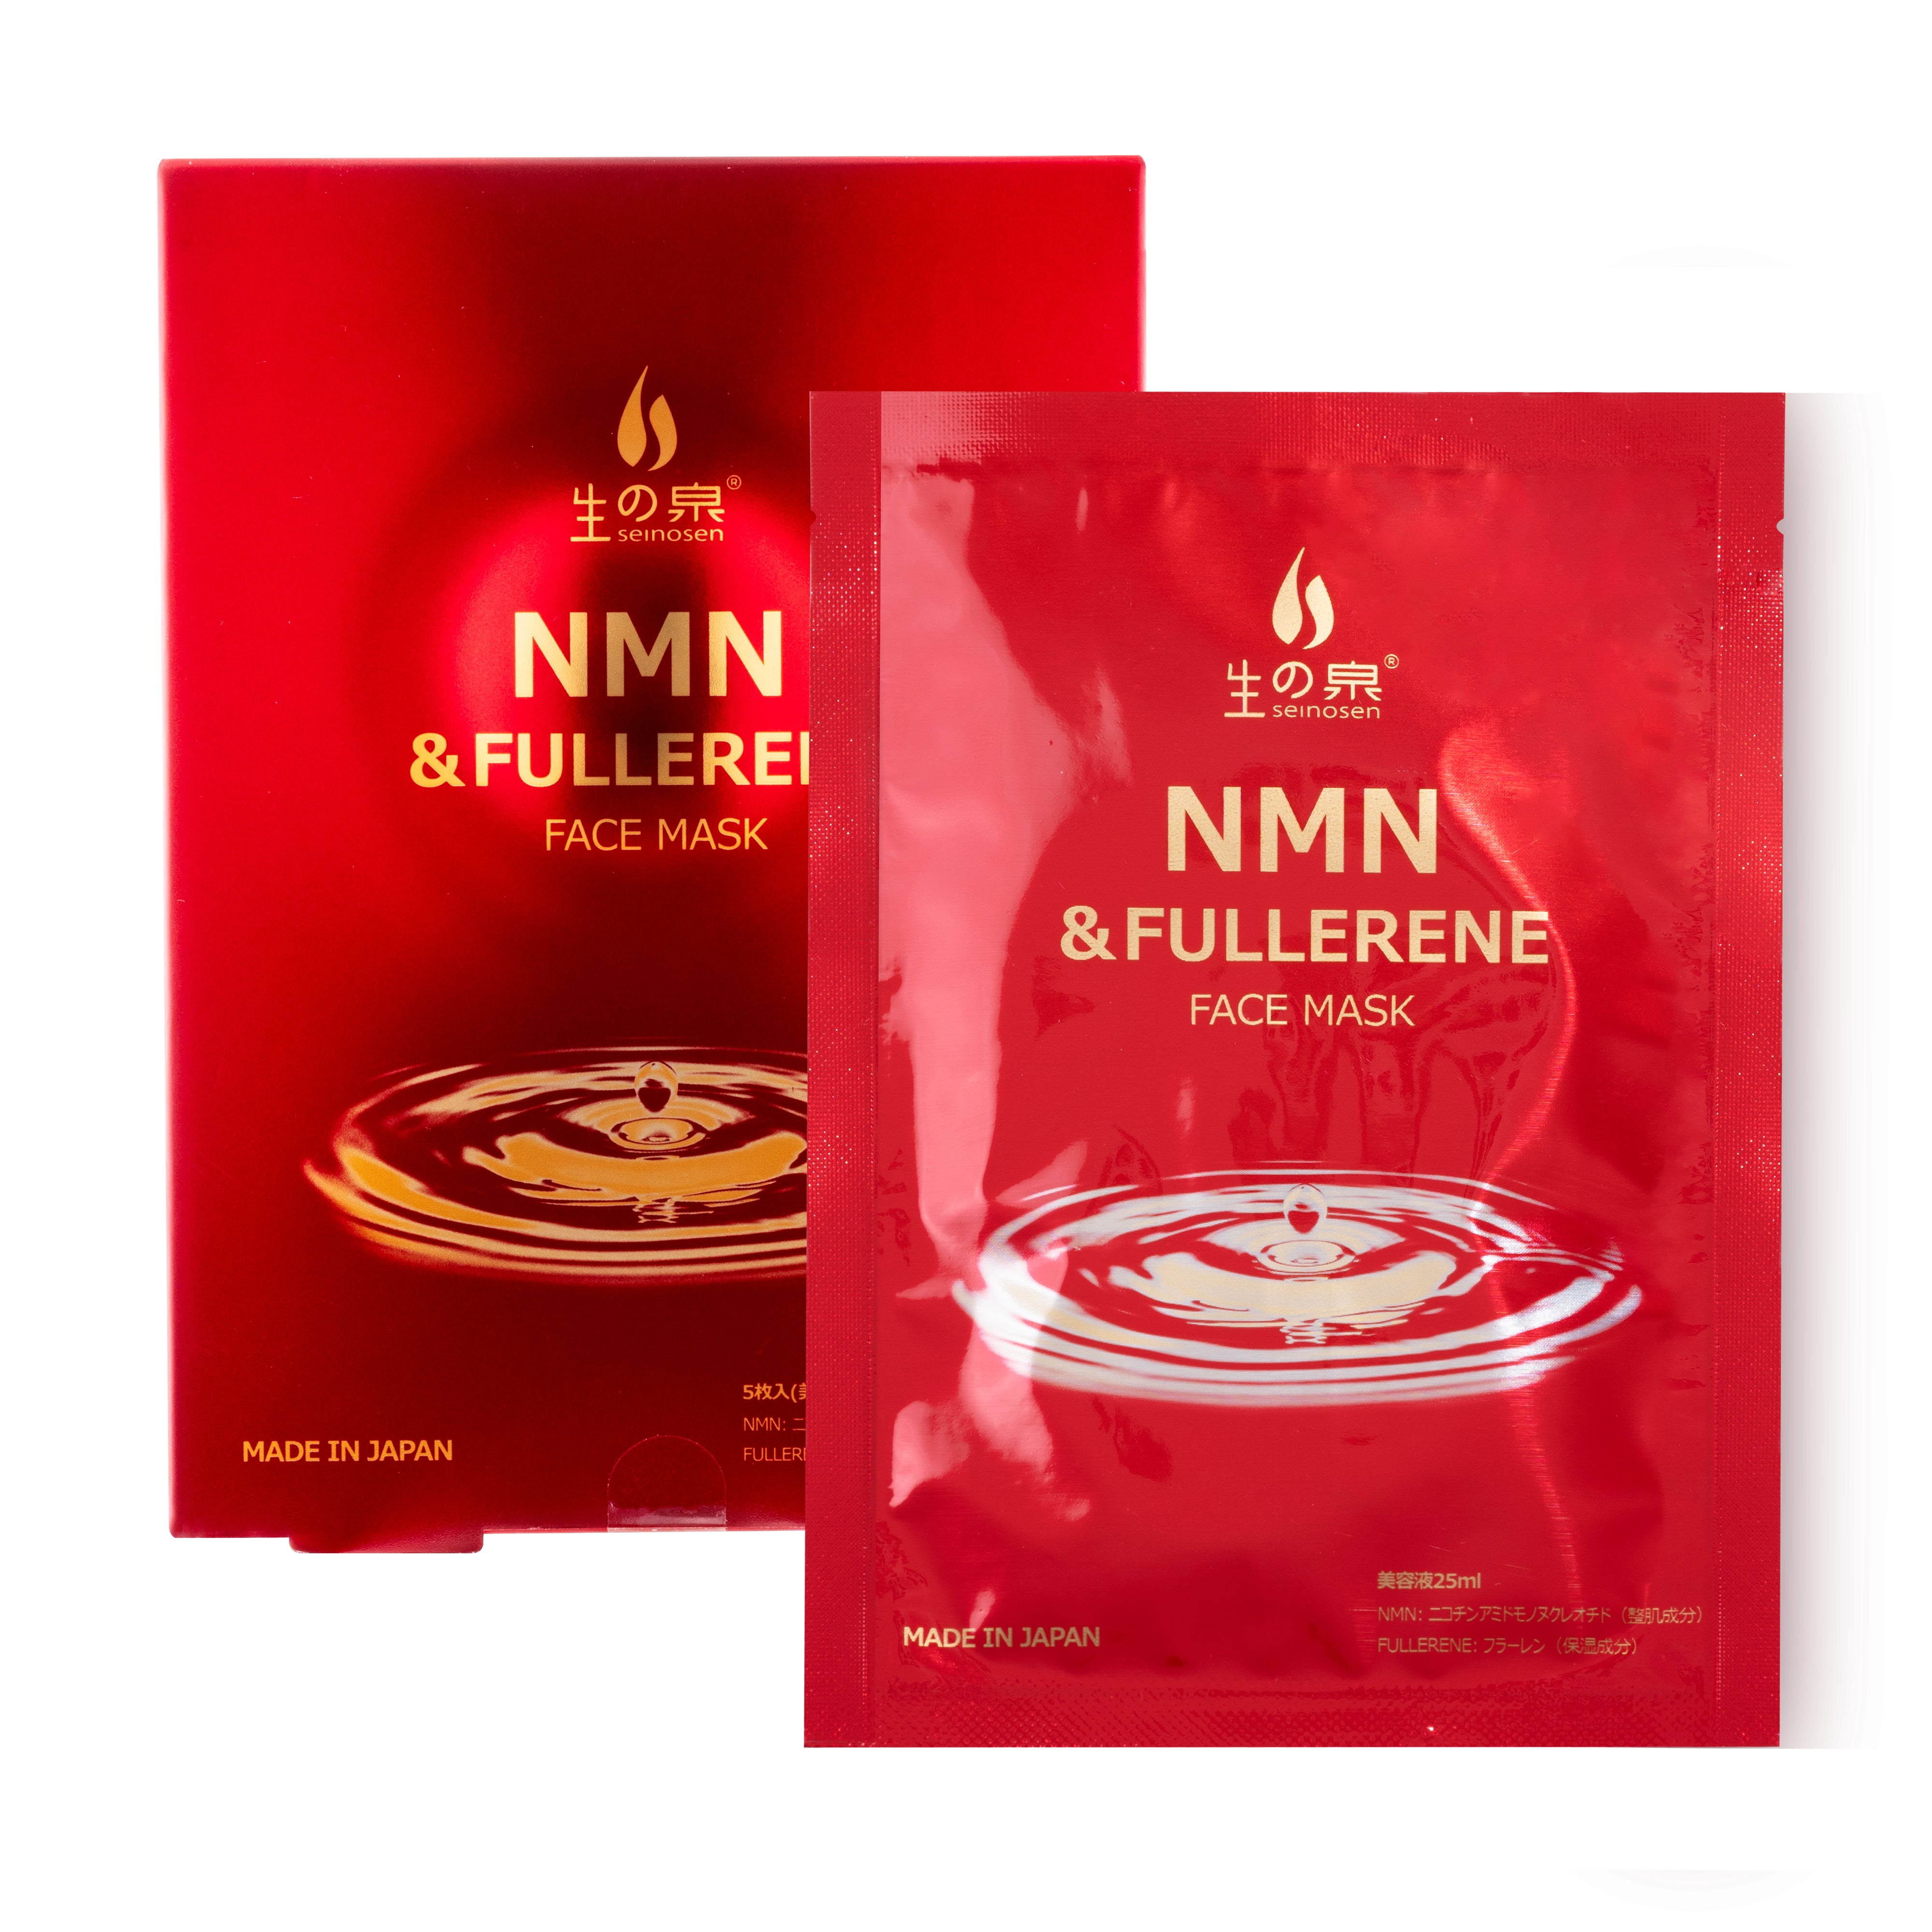 Japanese NMN fullerene mask content: 5 pieces (beauty serum/25ml per piece)